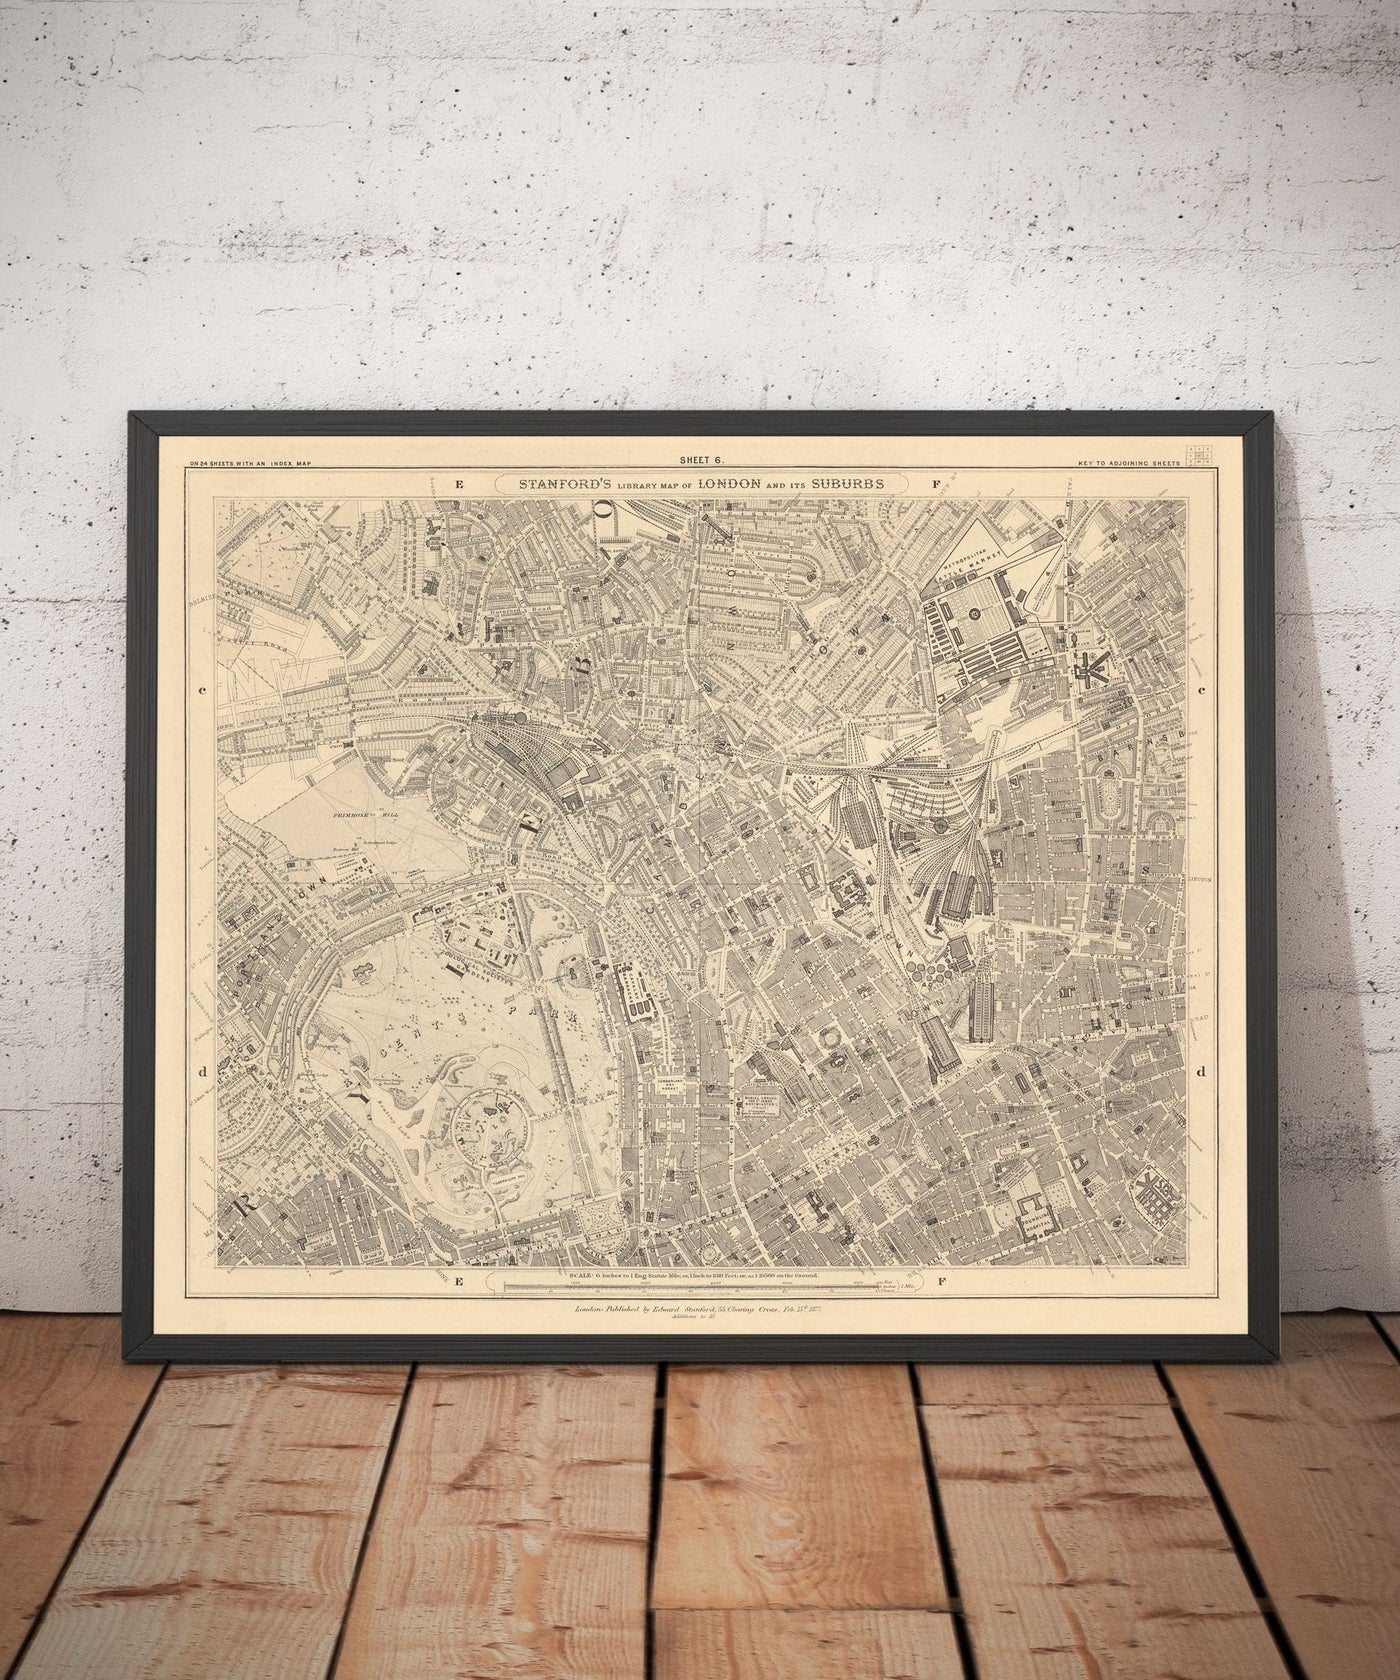 Ancienne carte de North London en 1862 par Edward Stanford - Camden, Régents Park, Town Kentish, Kings Cross - NW1, N1C, N7, NW5, NW3, NW8